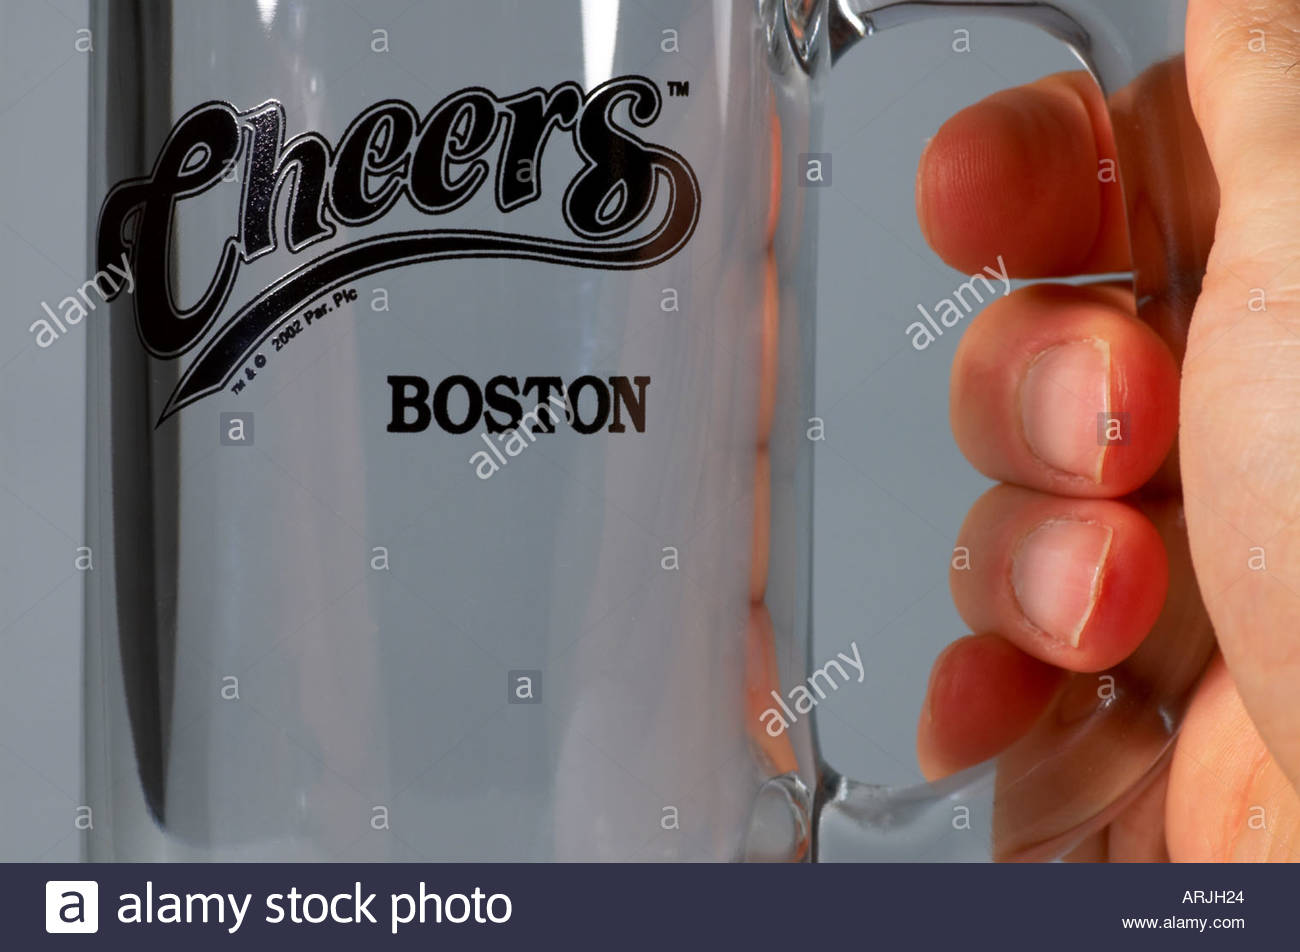 Tenant un verre de bière avec le logo sitcom Cheers Banque D'Images